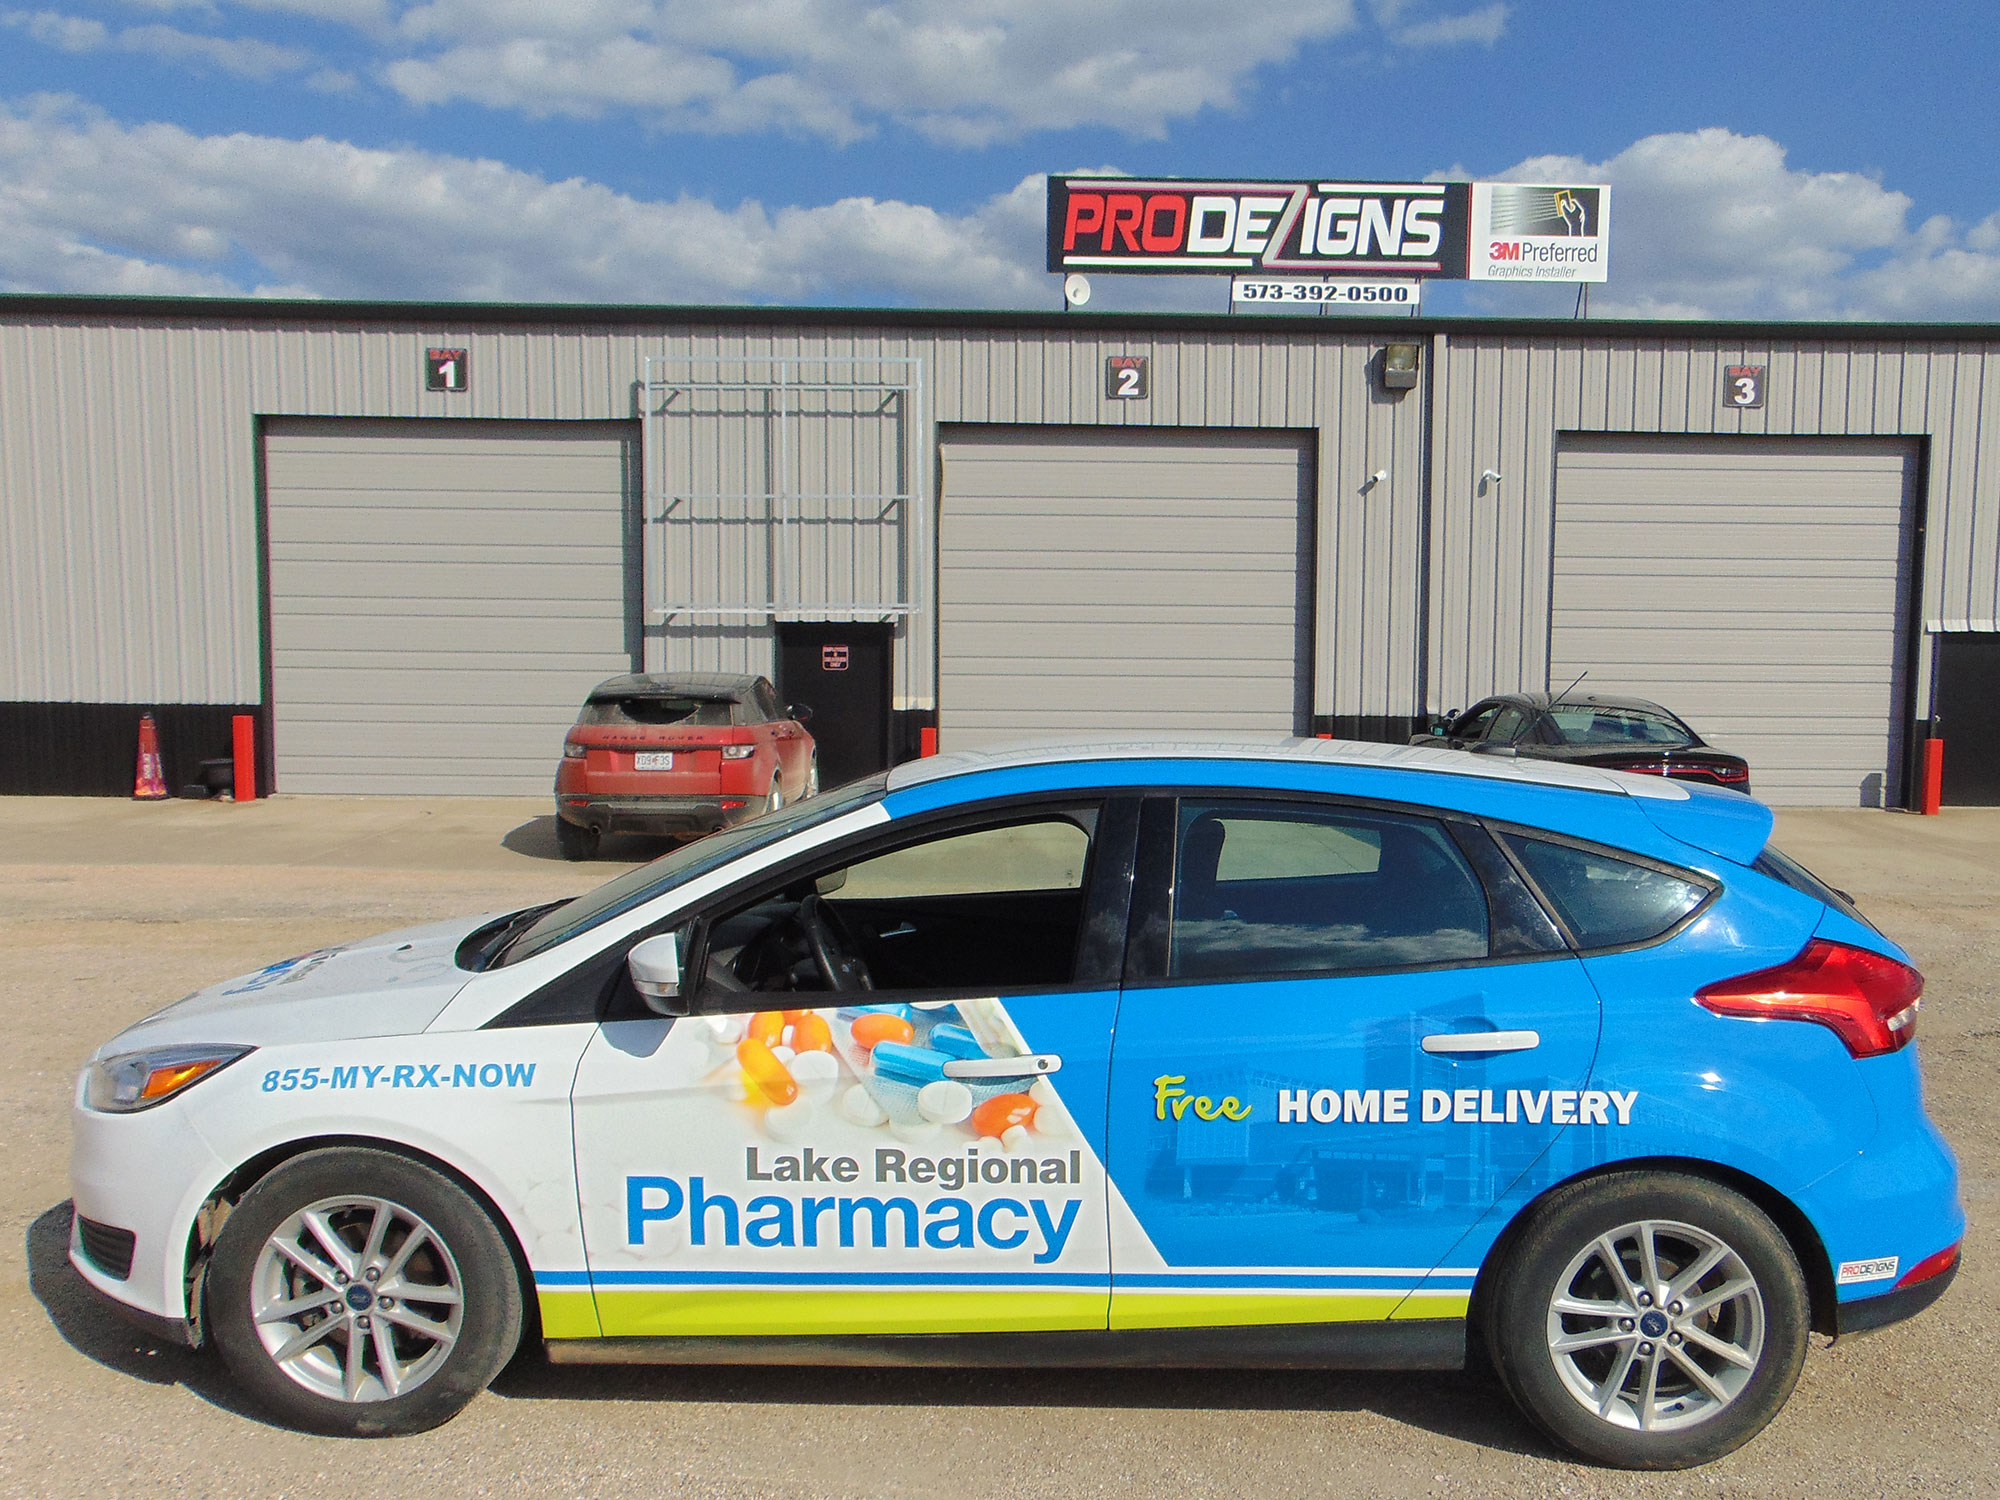 Lake Regional Pharmacy Vehicle Graphics And Wraps Pro Dezigns Columbia Mo